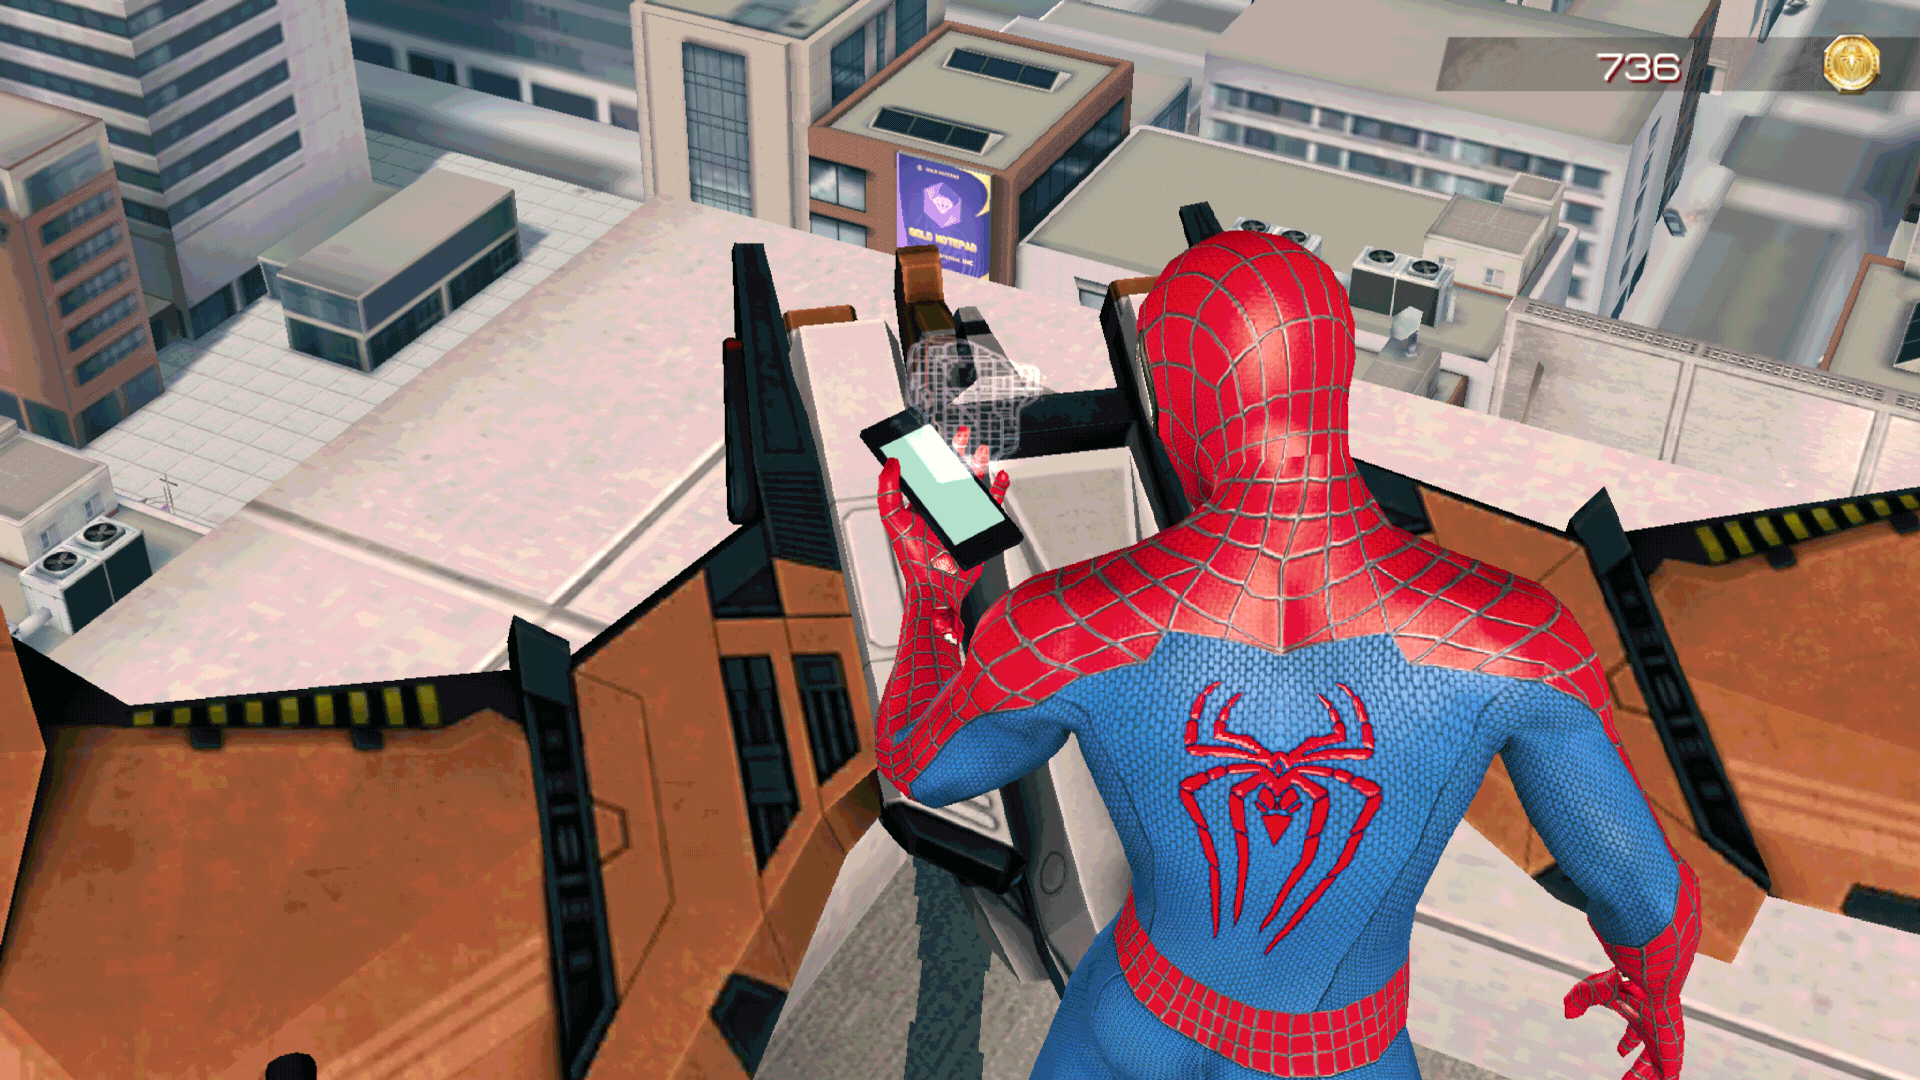 Человек паук бесплатная игра на телефон. The amazing Spider-man (игра, 2012). Spider-man 2 (игра). Человек паук амазинг 1. The amazing Spider-man 2 (игра, 2014).